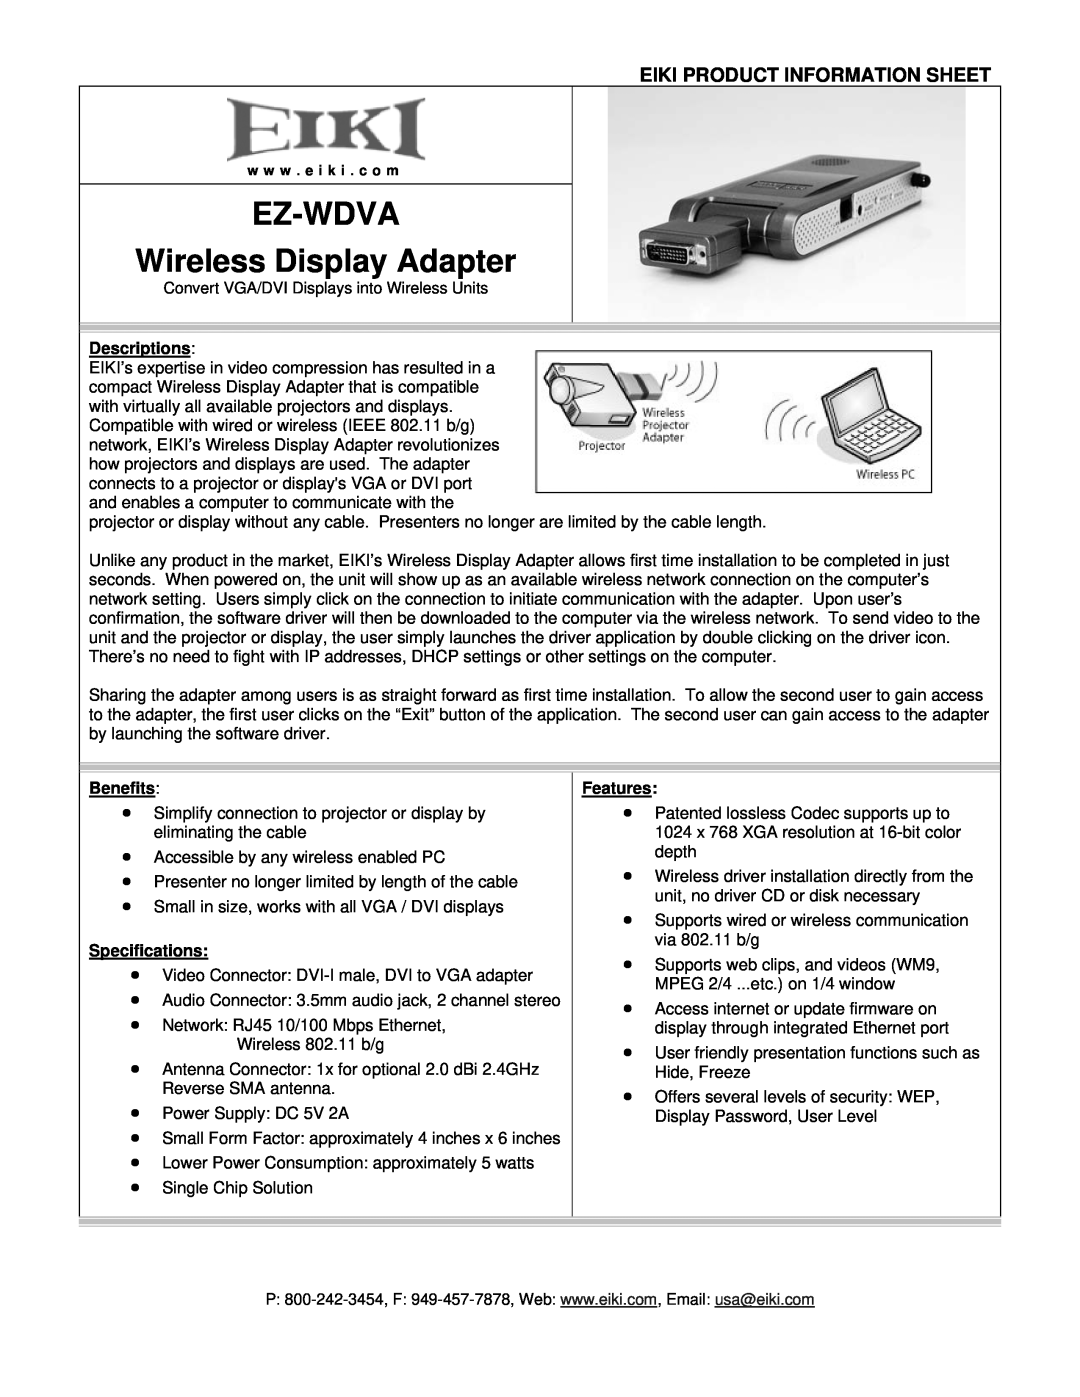 Eiki specifications EZ-WDVA Wireless Display Adapter, Eiki Product Information Sheet, Descriptions, Benefits, Features 